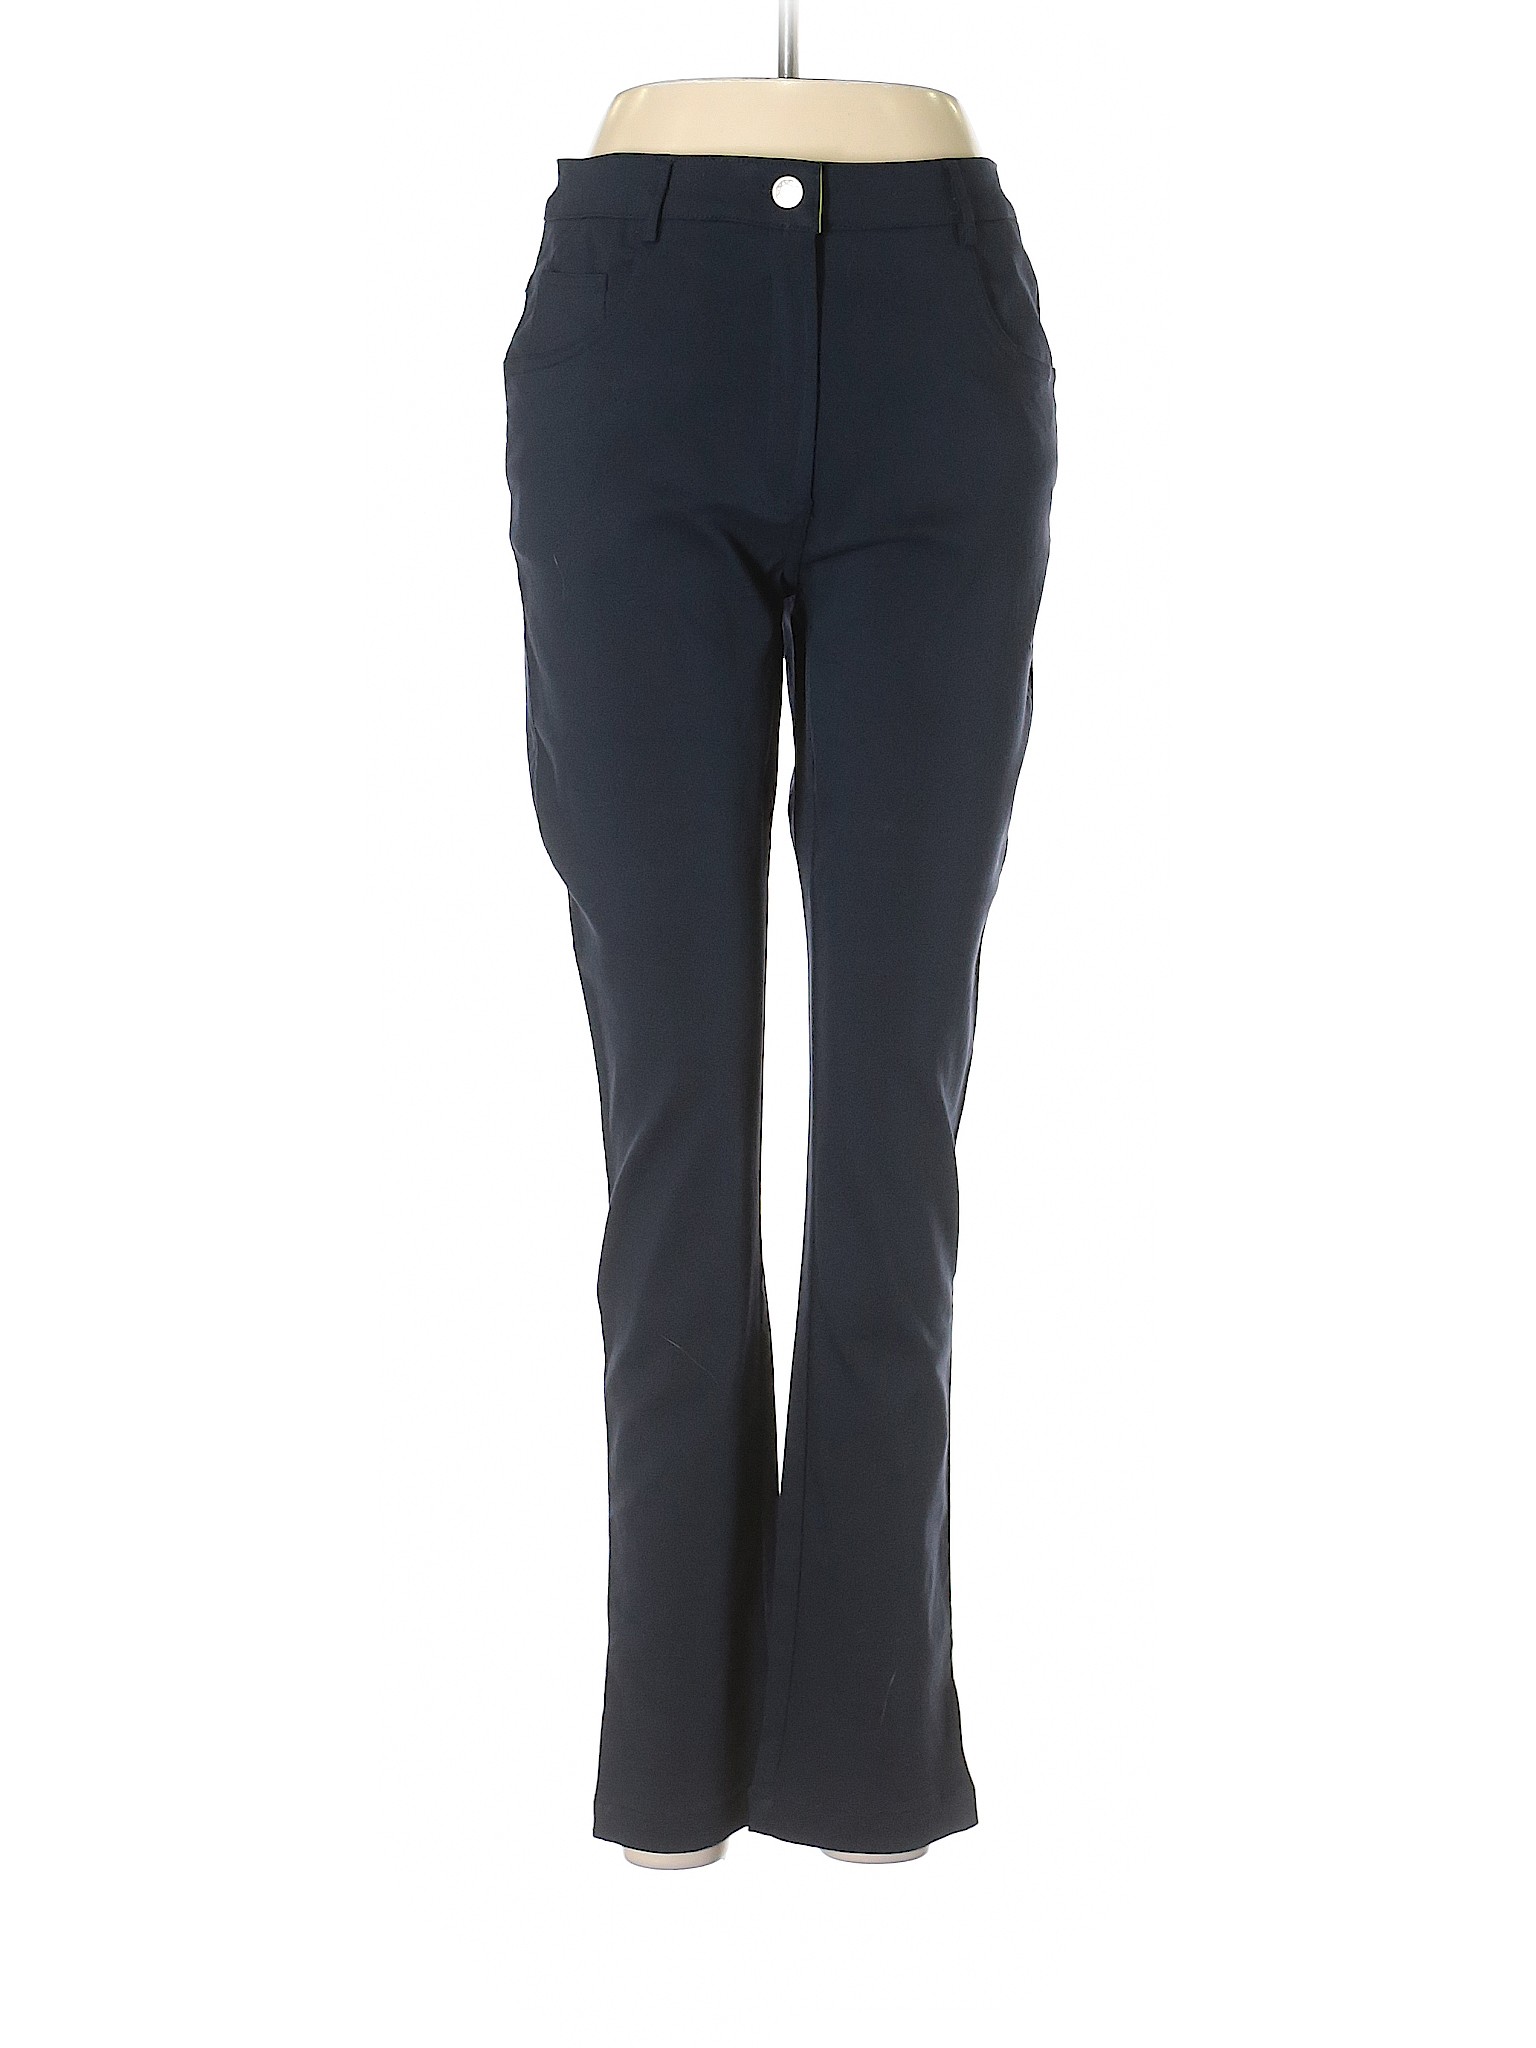 Gretchen Scott Designs Women Black Casual Pants M | eBay